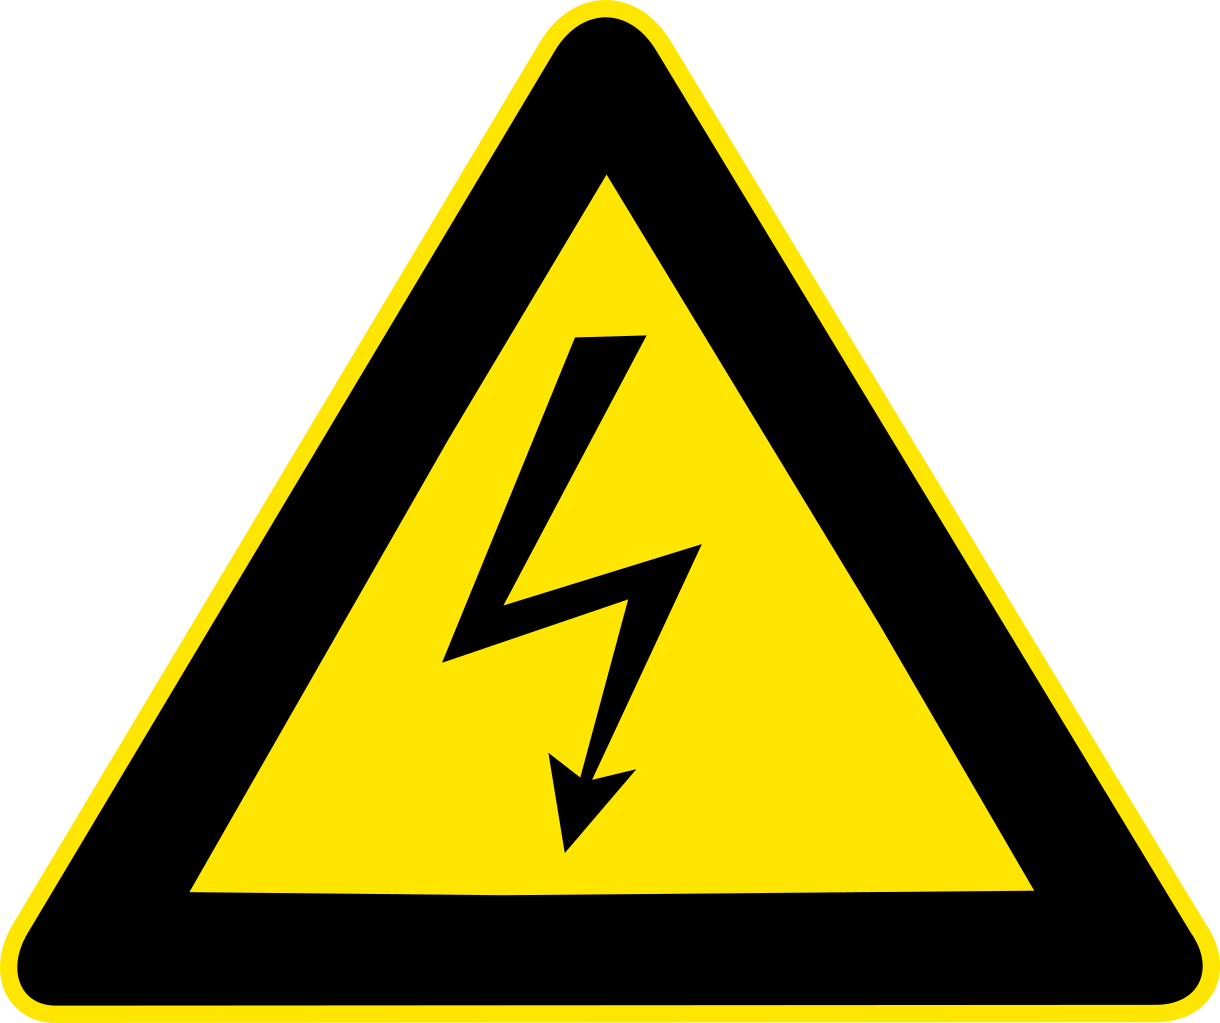 File:High voltage warning.svg - Wikipedia